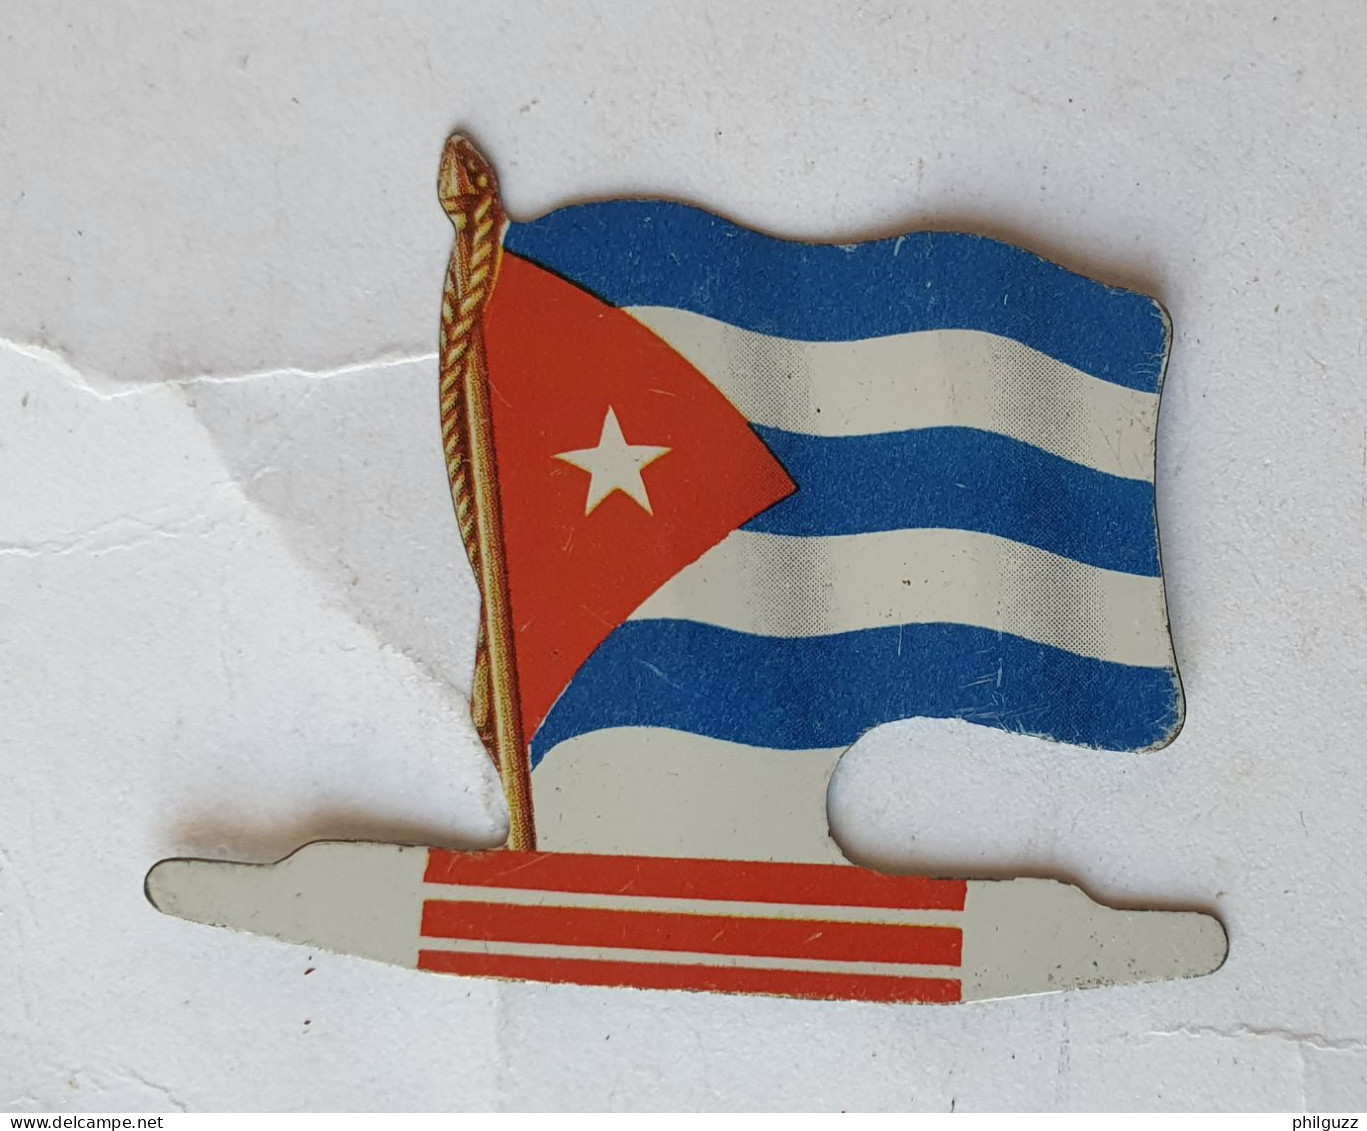 FIGURINE PUBLICITAIRE PLAQUE En Métal DRAPEAU AMERICORAMA ALSACIENNE REPUBLIQUE CUBA 1963 - Altri & Non Classificati